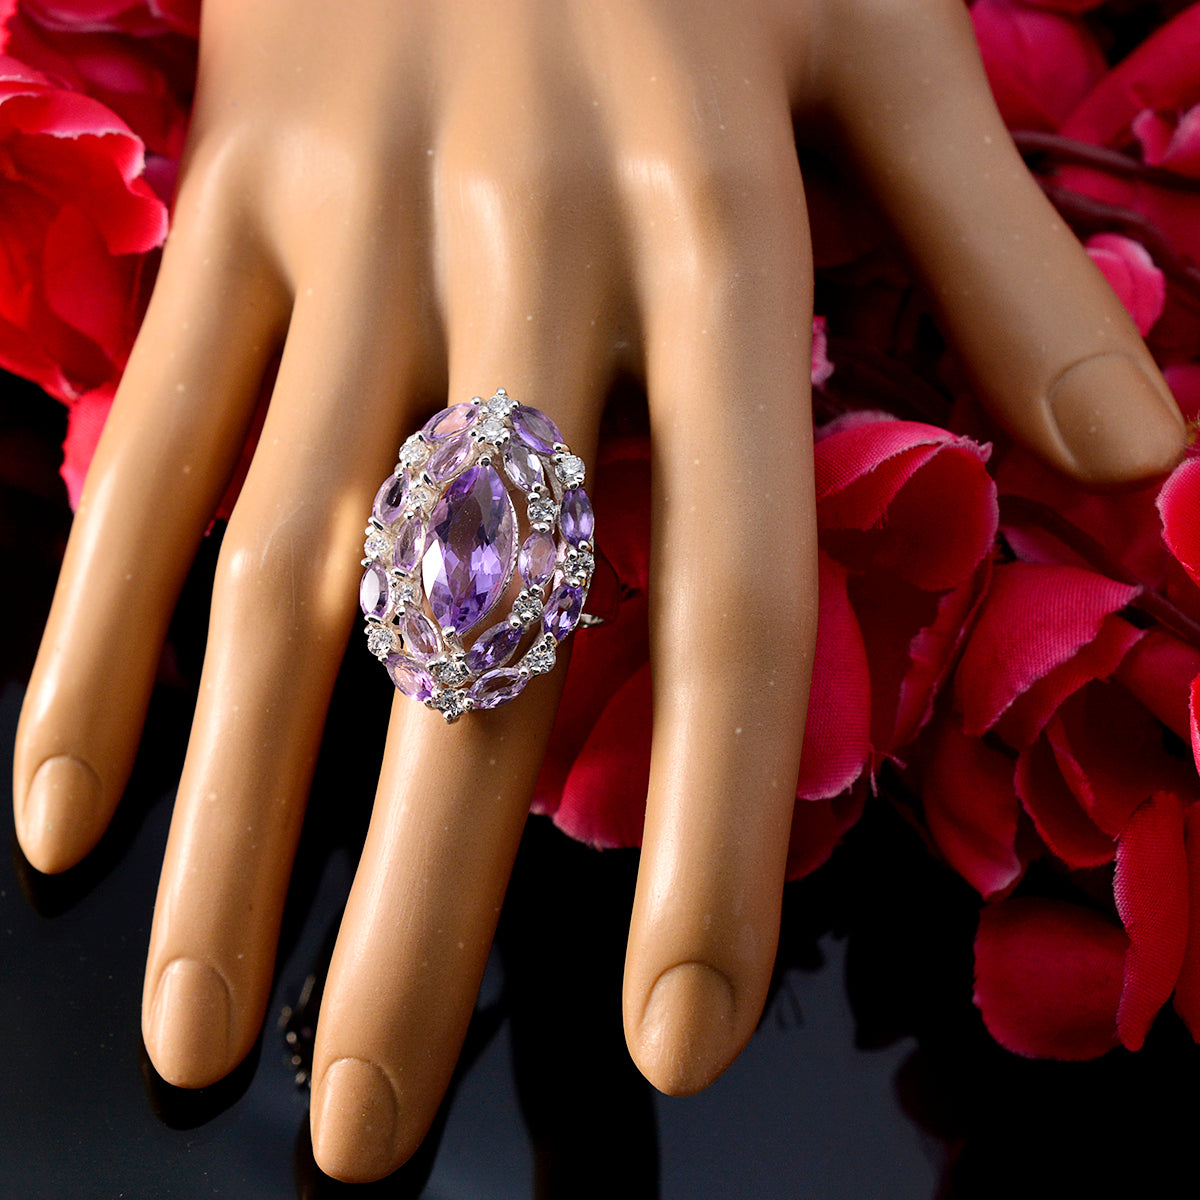 Rajasthan Gemstones Amethyst Solid Silver Rings Gift For Halloween